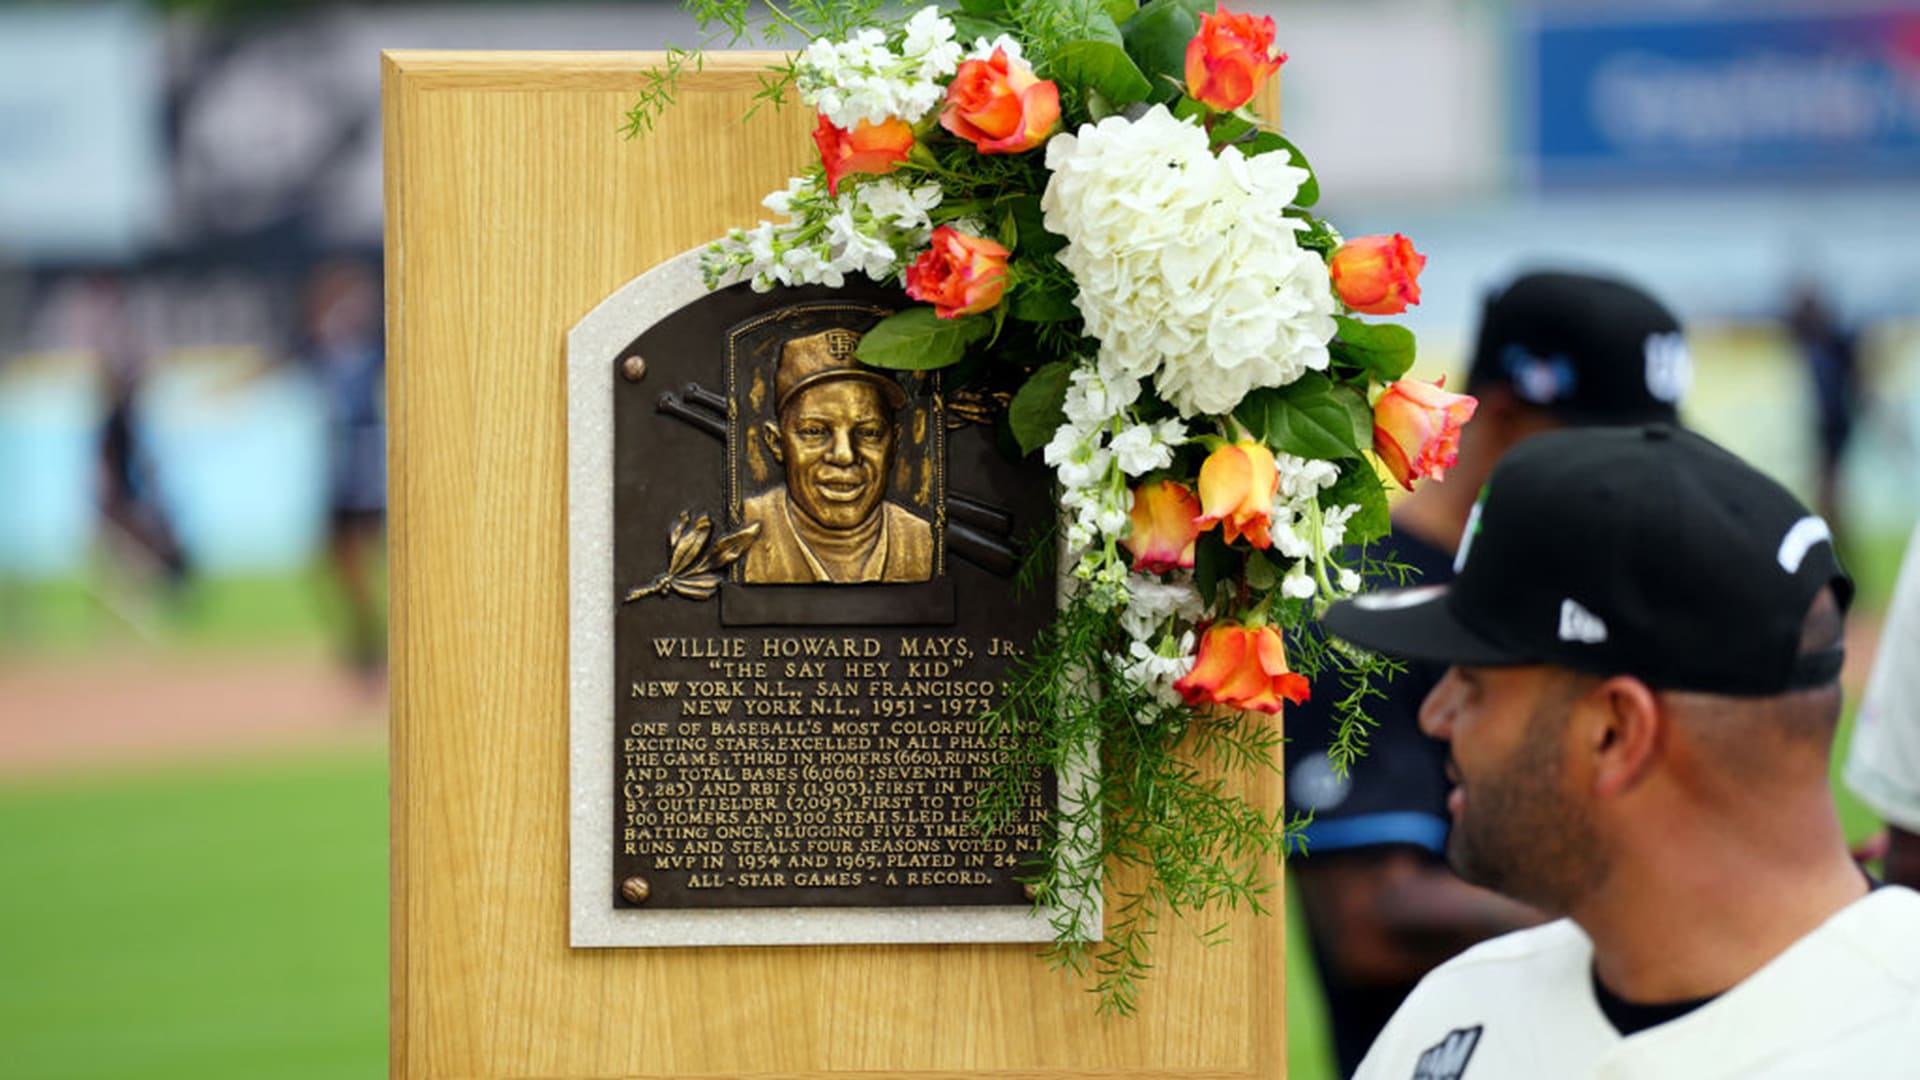 Albert Pujols gazes upon Willie Mays' Hall of Fame plaque